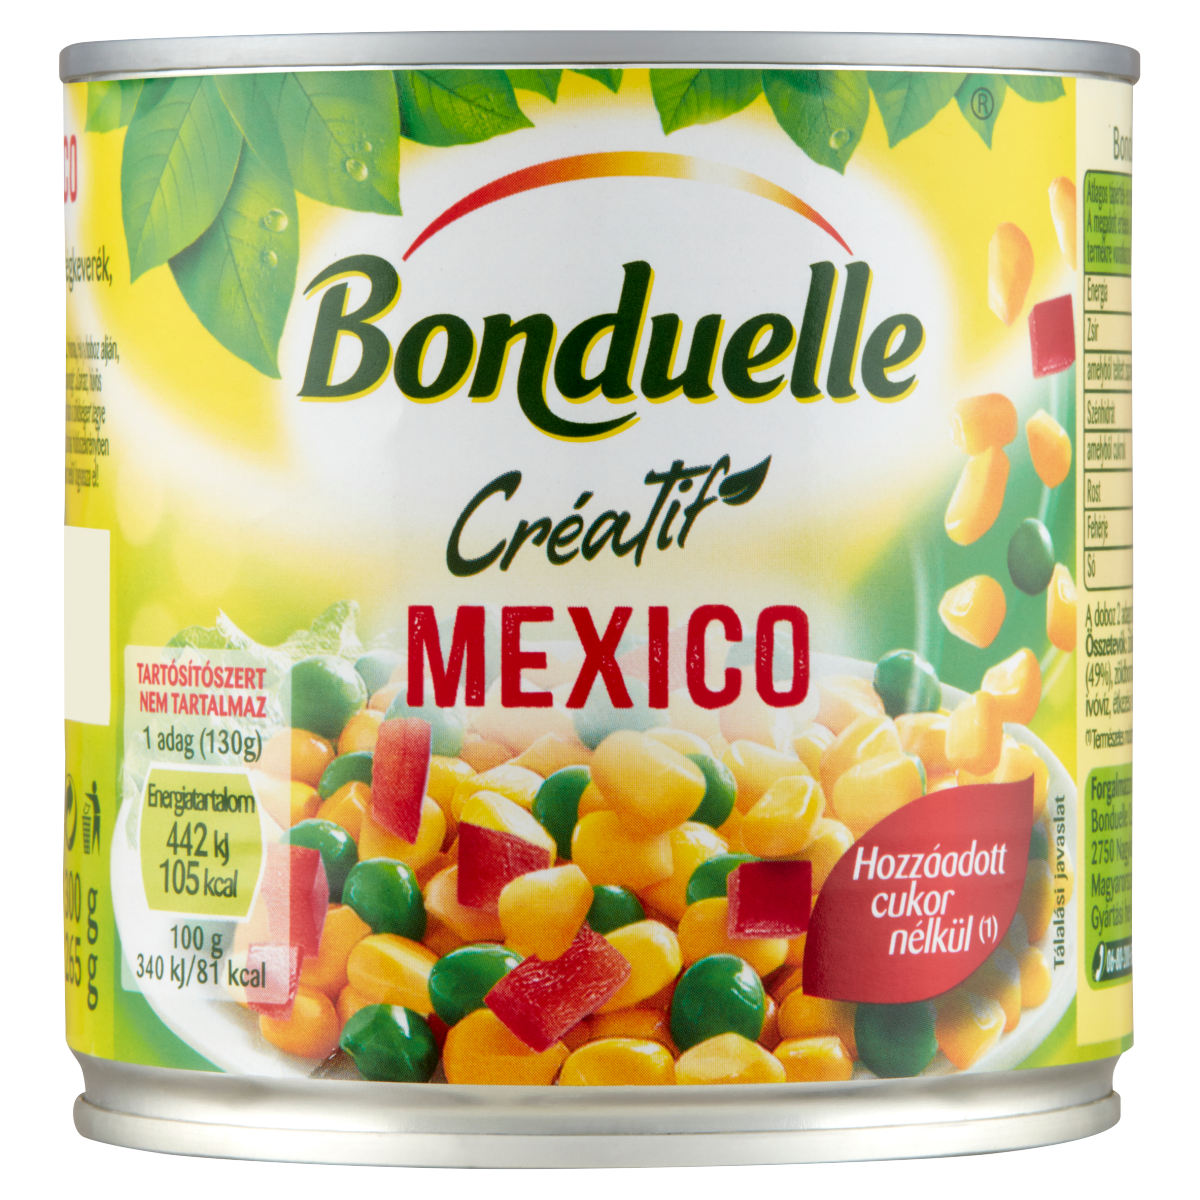 BONDUELLE CREATIF MEXICO MIX 300G